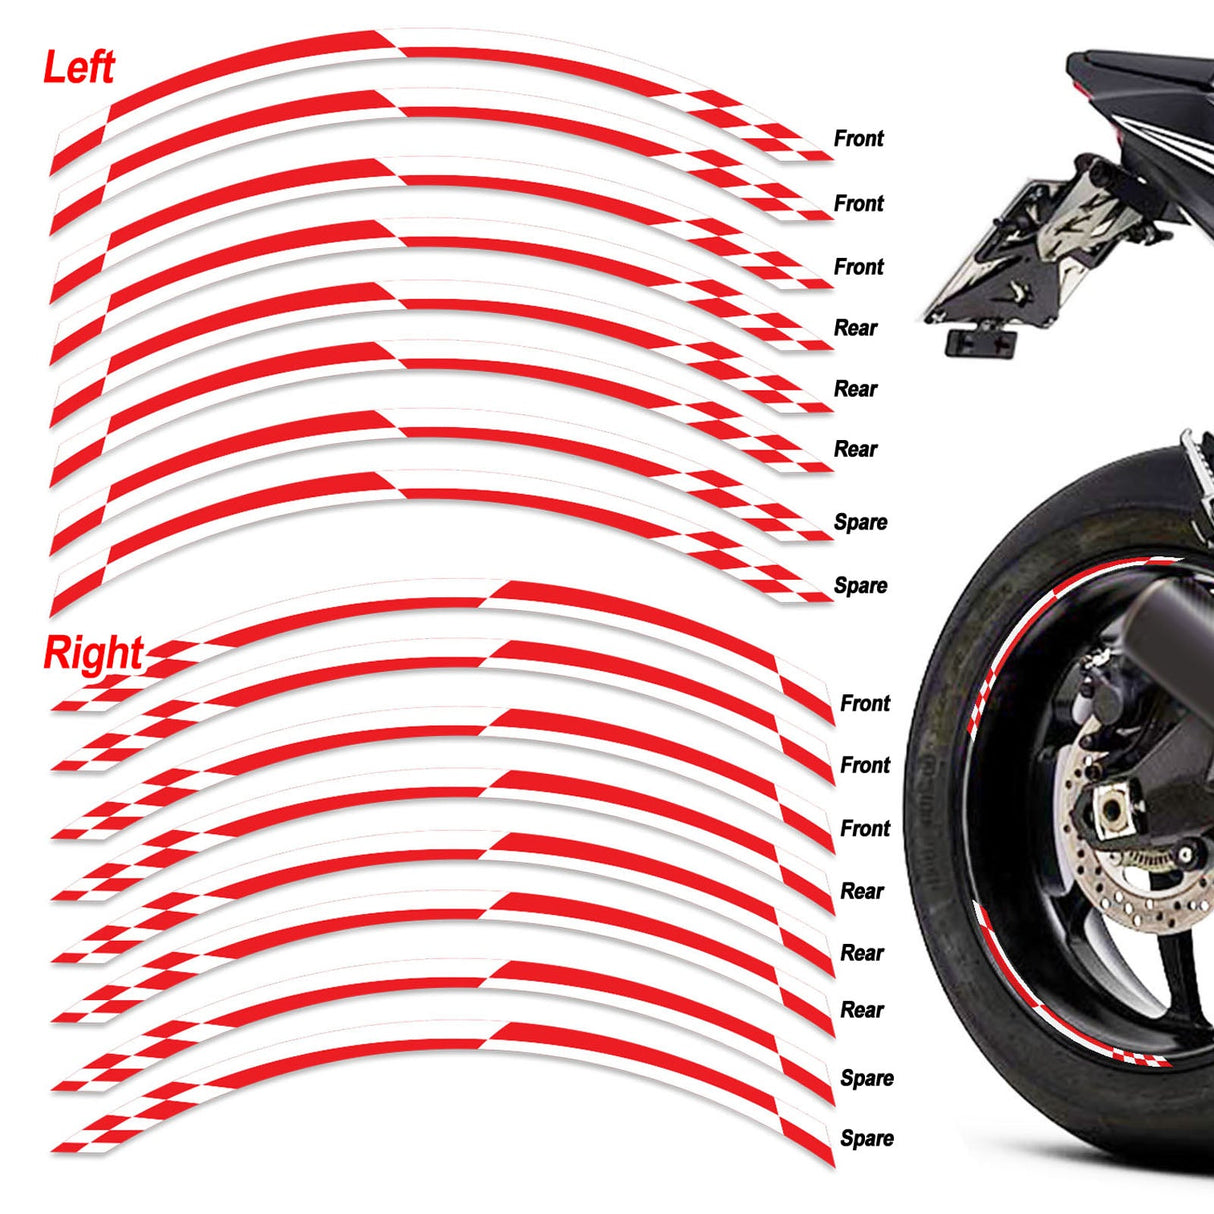 StickerBao Red Check01 White Standard Edge Rim Sticker Universal Motorcycle 17 inch Wheel Stripe Decal For Triumph